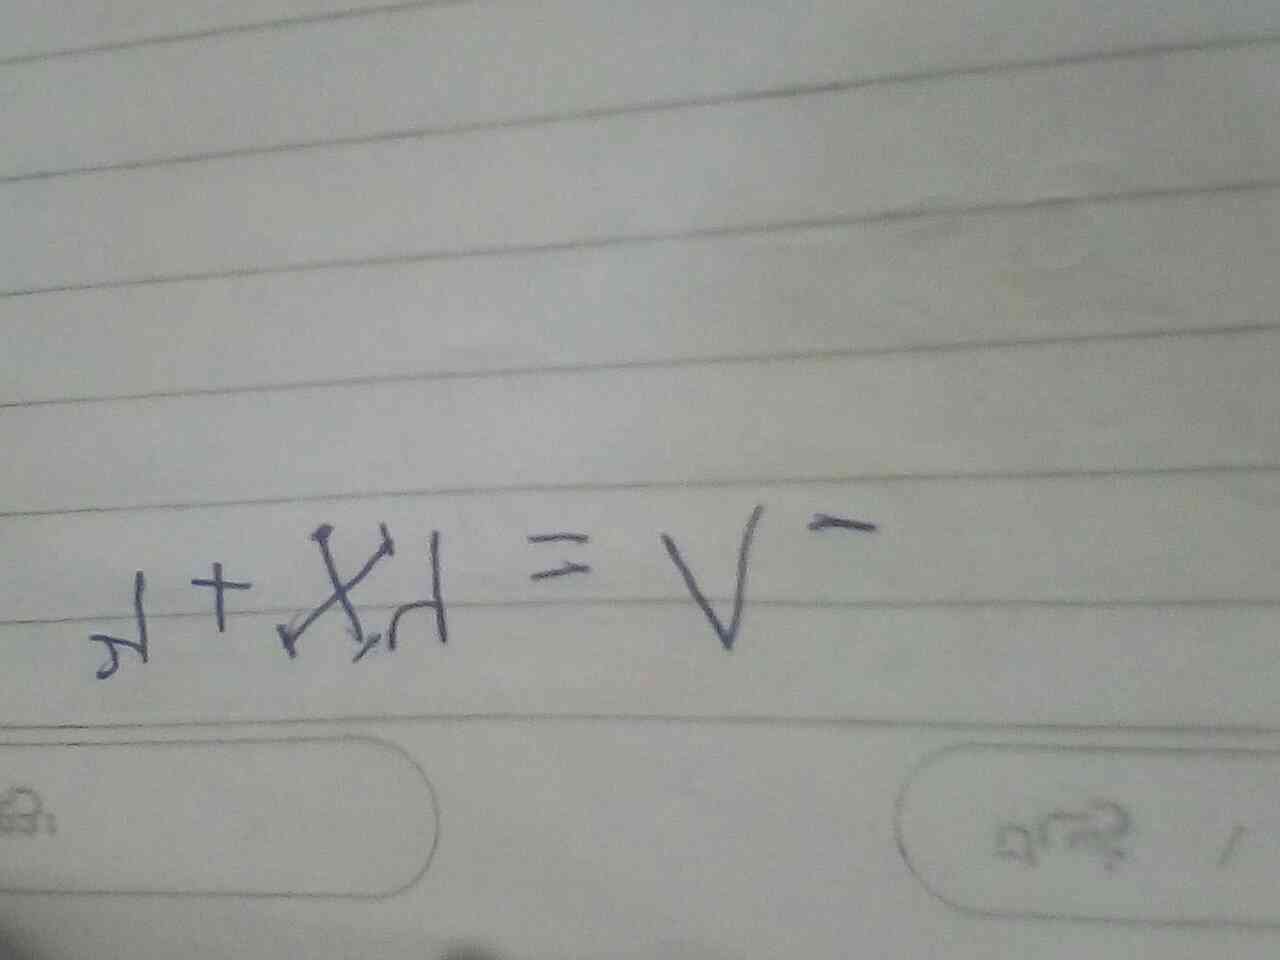 معادله رو حل کنید 